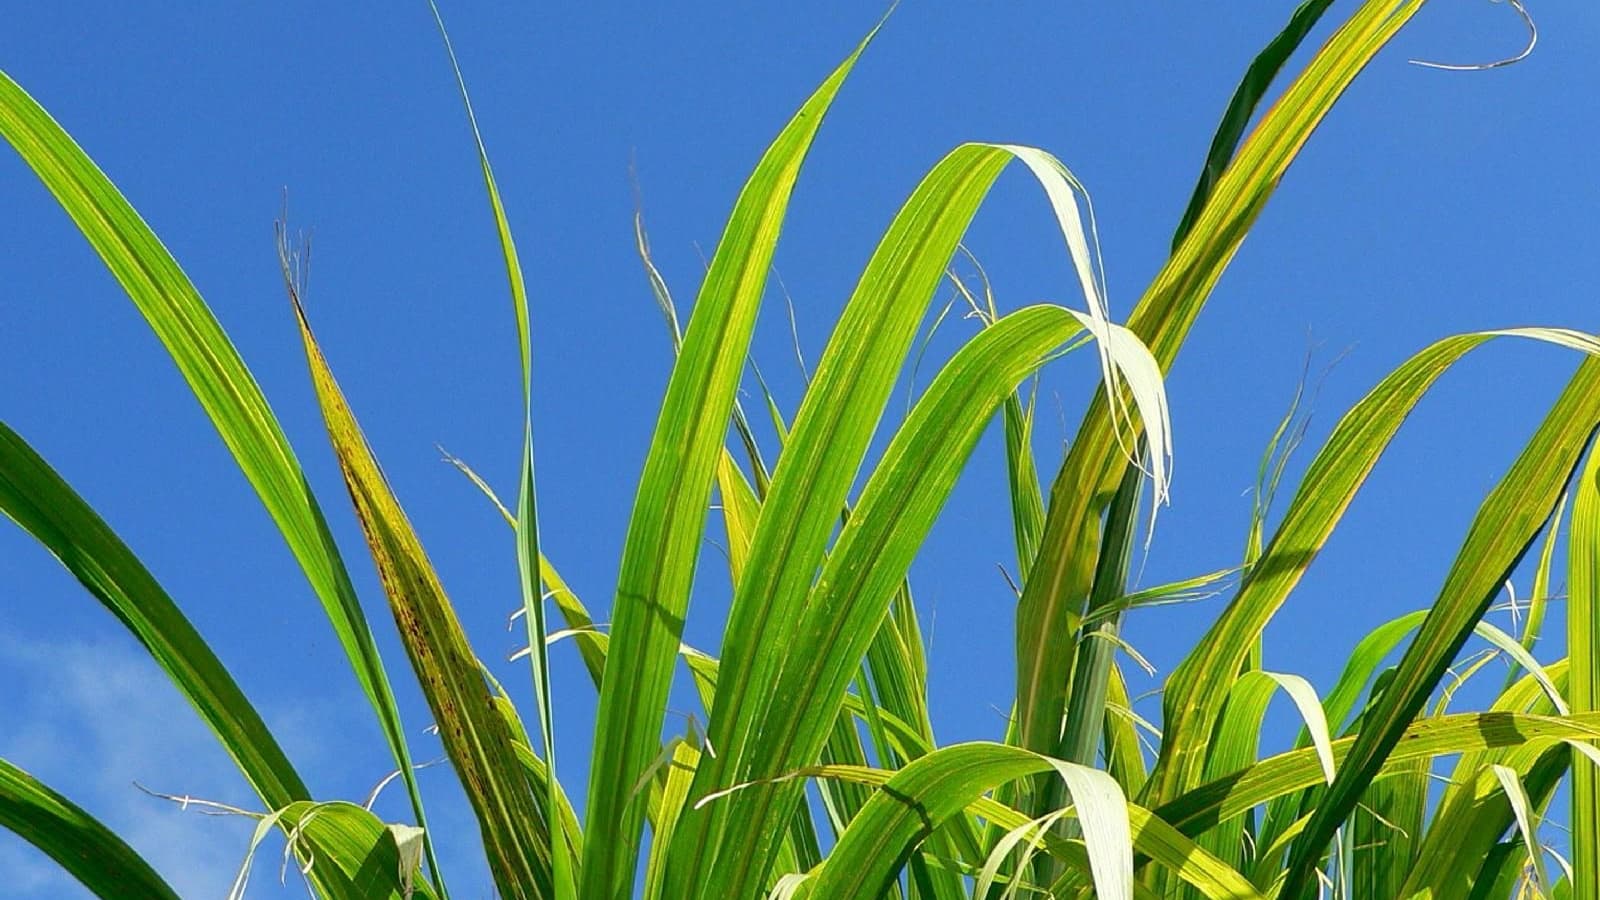 Biofuel crops (photo: Texas A&M University biofuels research alliance)